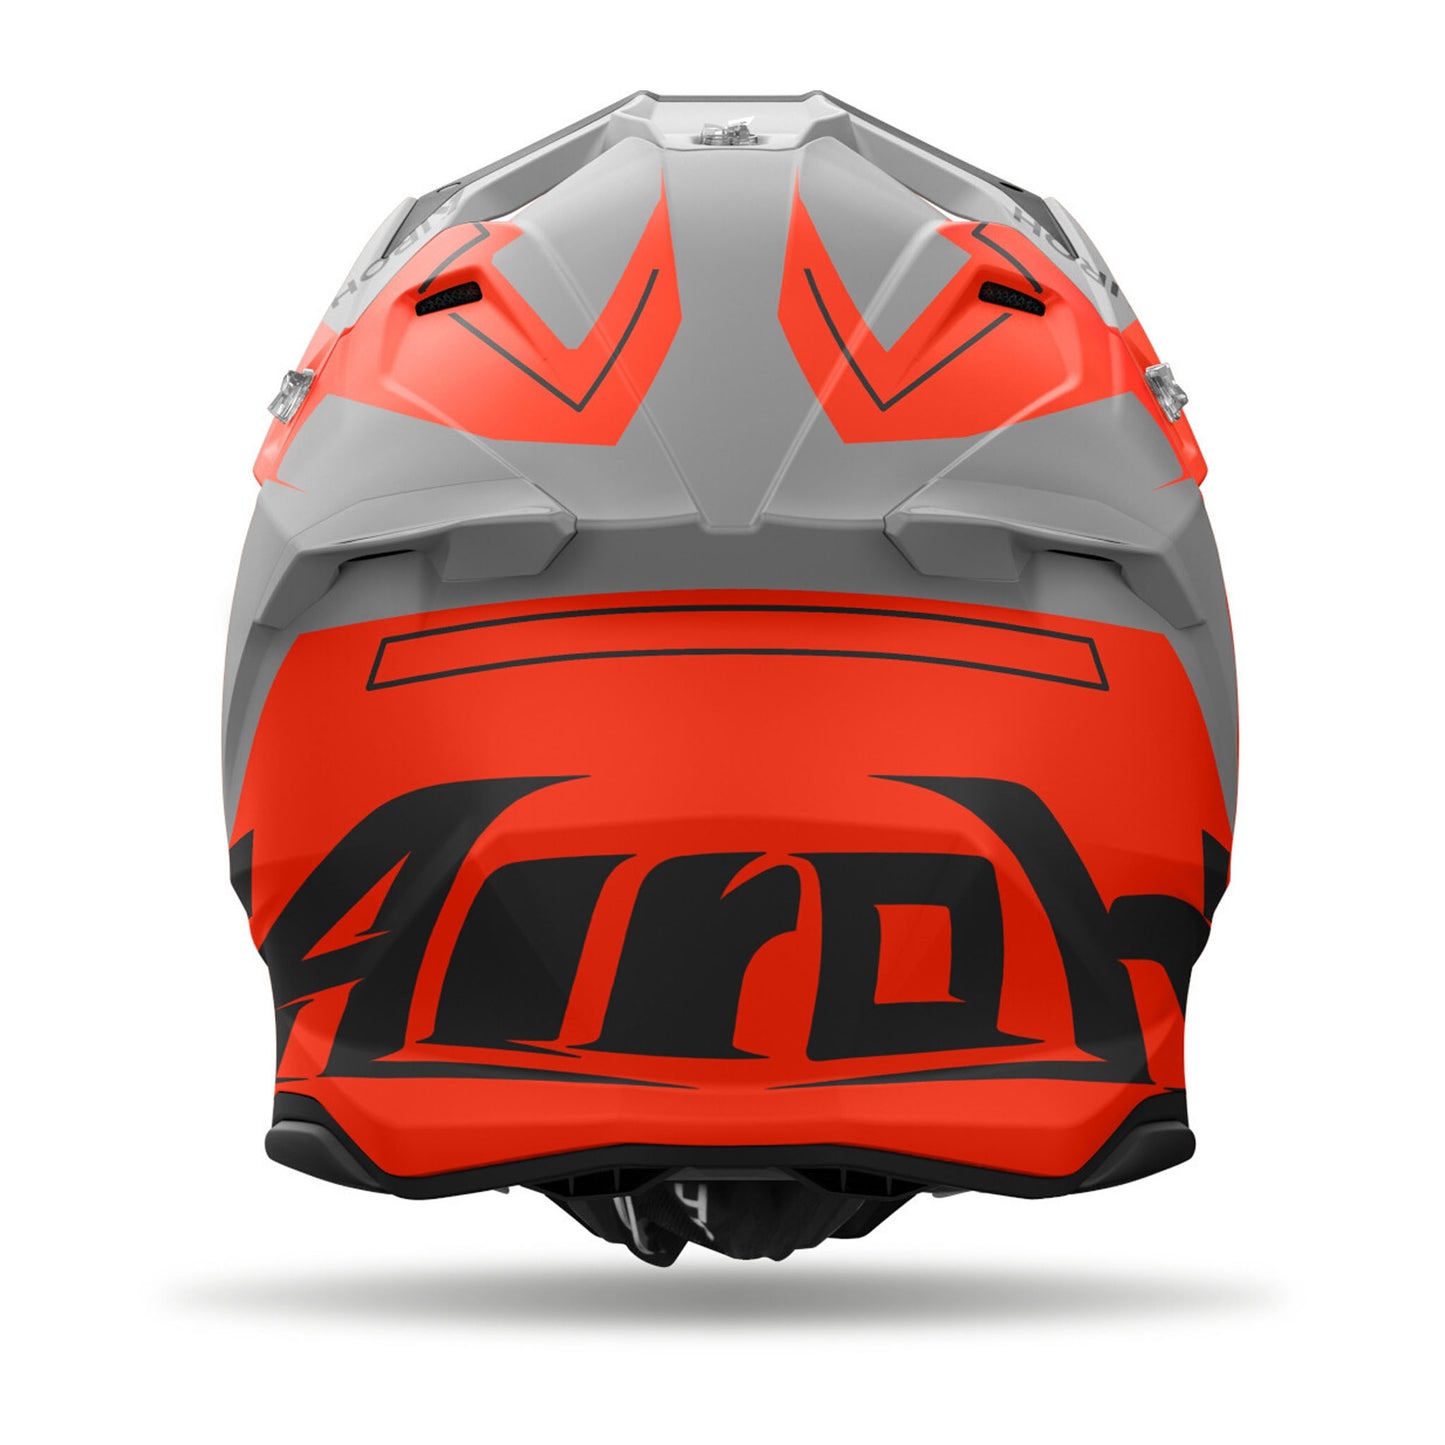 Airoh Twist 3 Dizzy Helmet (Fluo Orange Matte)